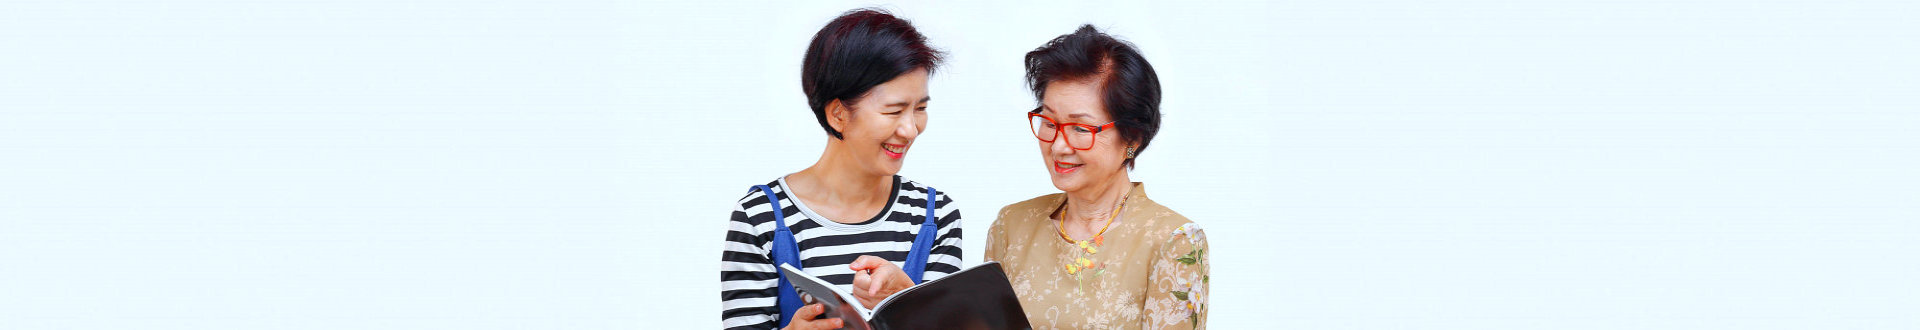 caregiver reading diary to a senior woman